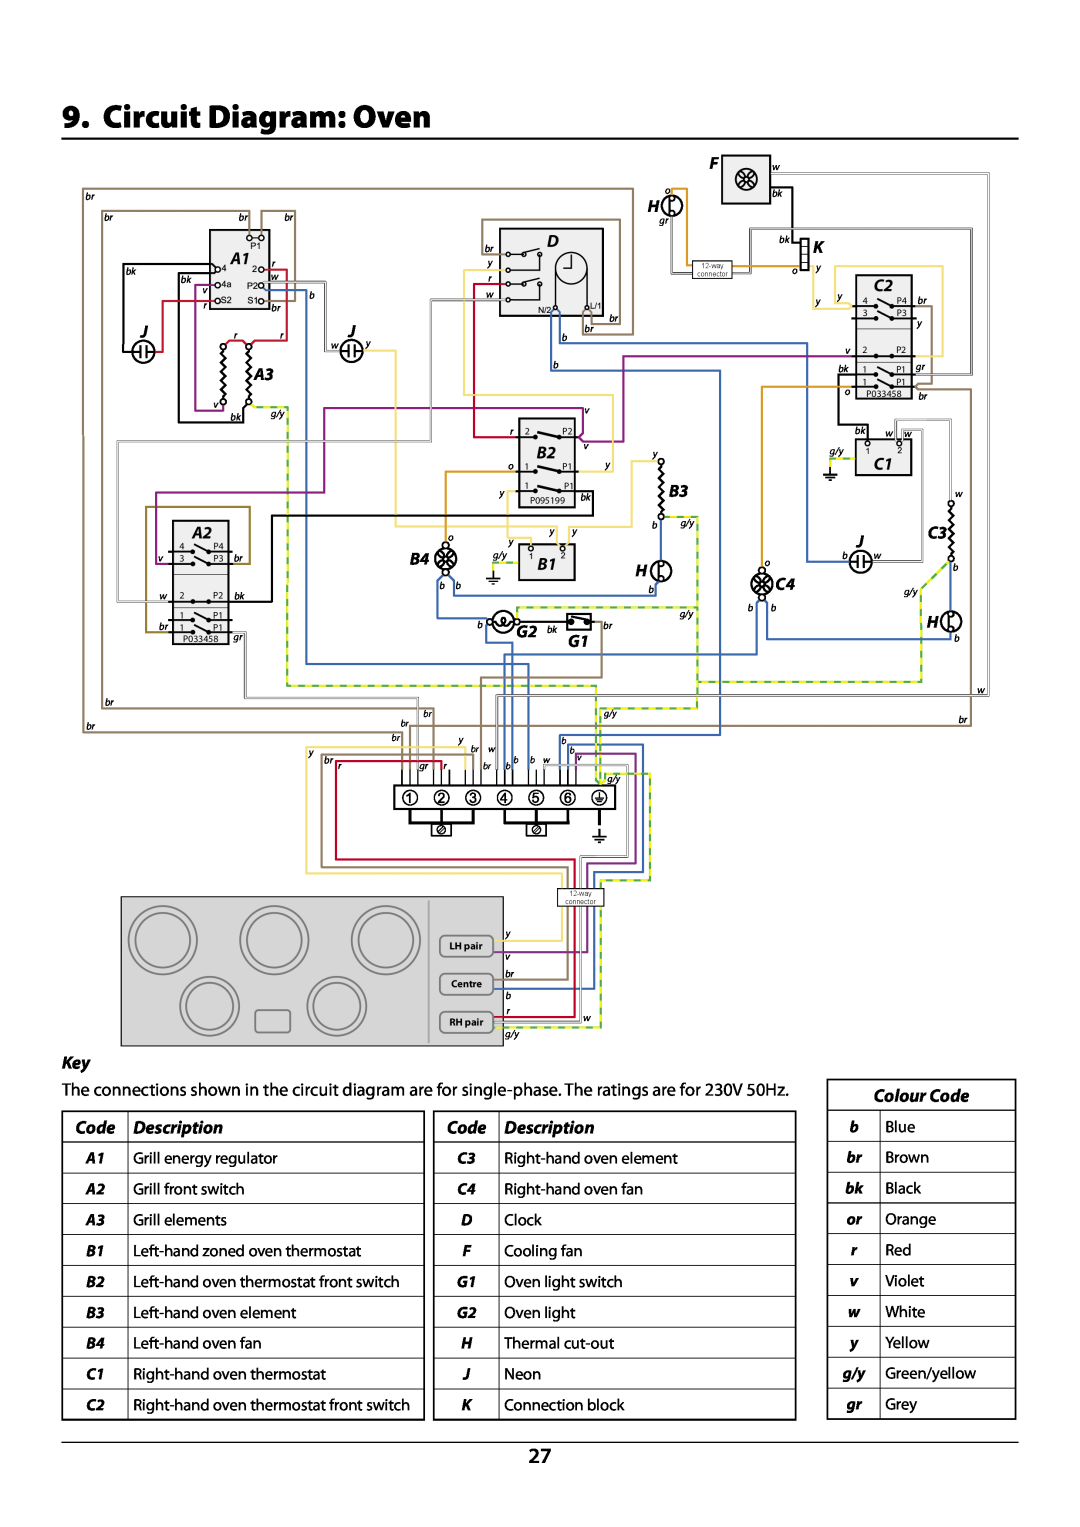 Rangemaster U109976 - 02 manual Circuit Diagram Oven, Code, Description 